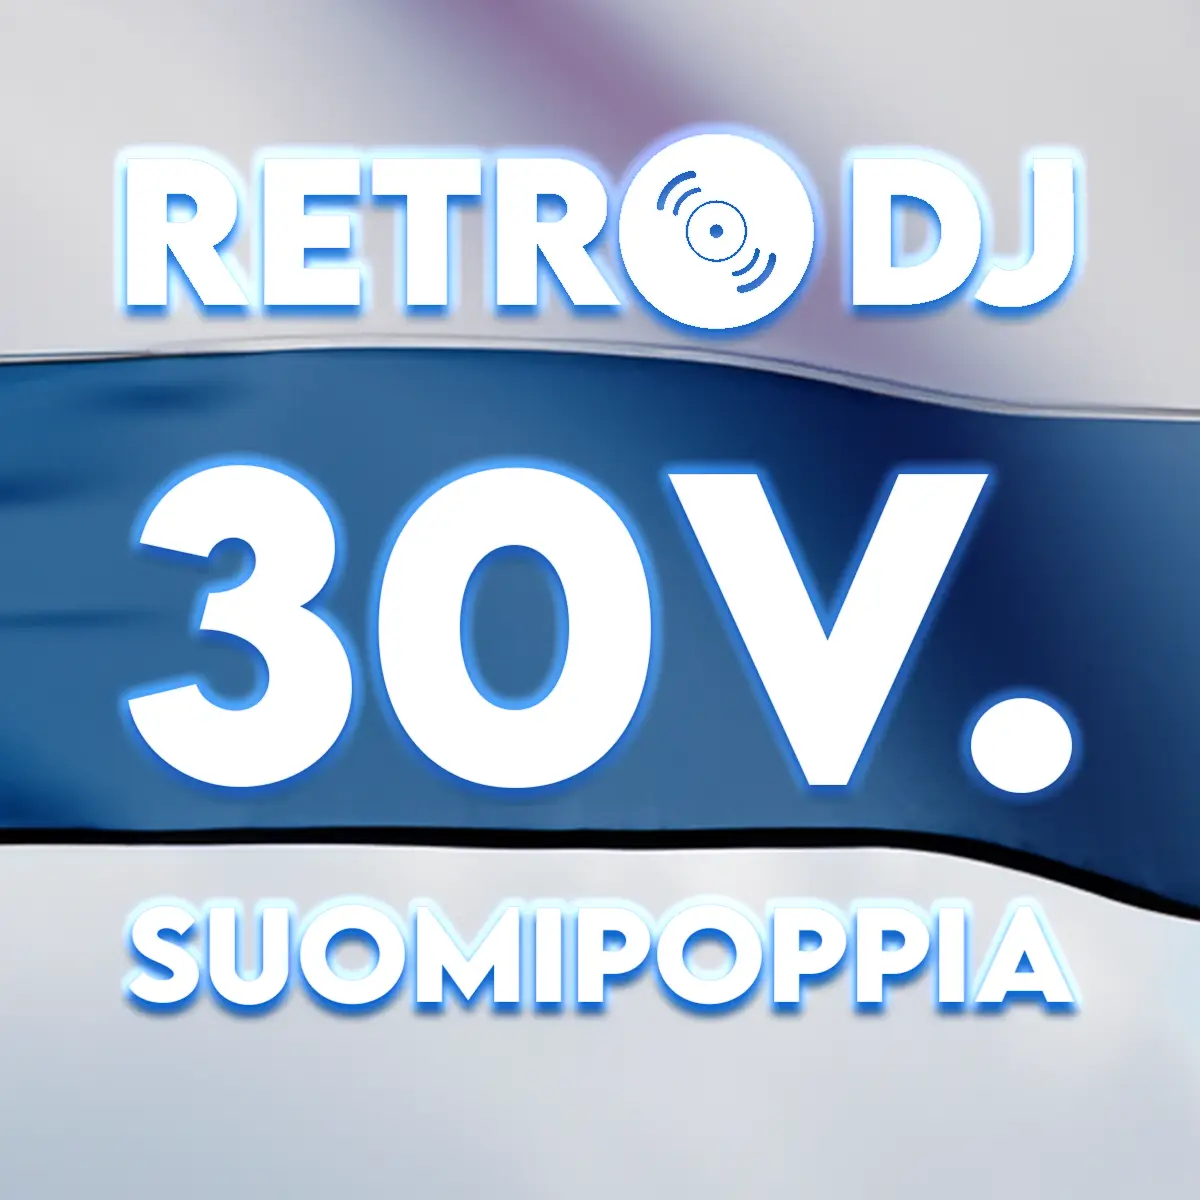 Retro DJ 30v. Suomipop bileet